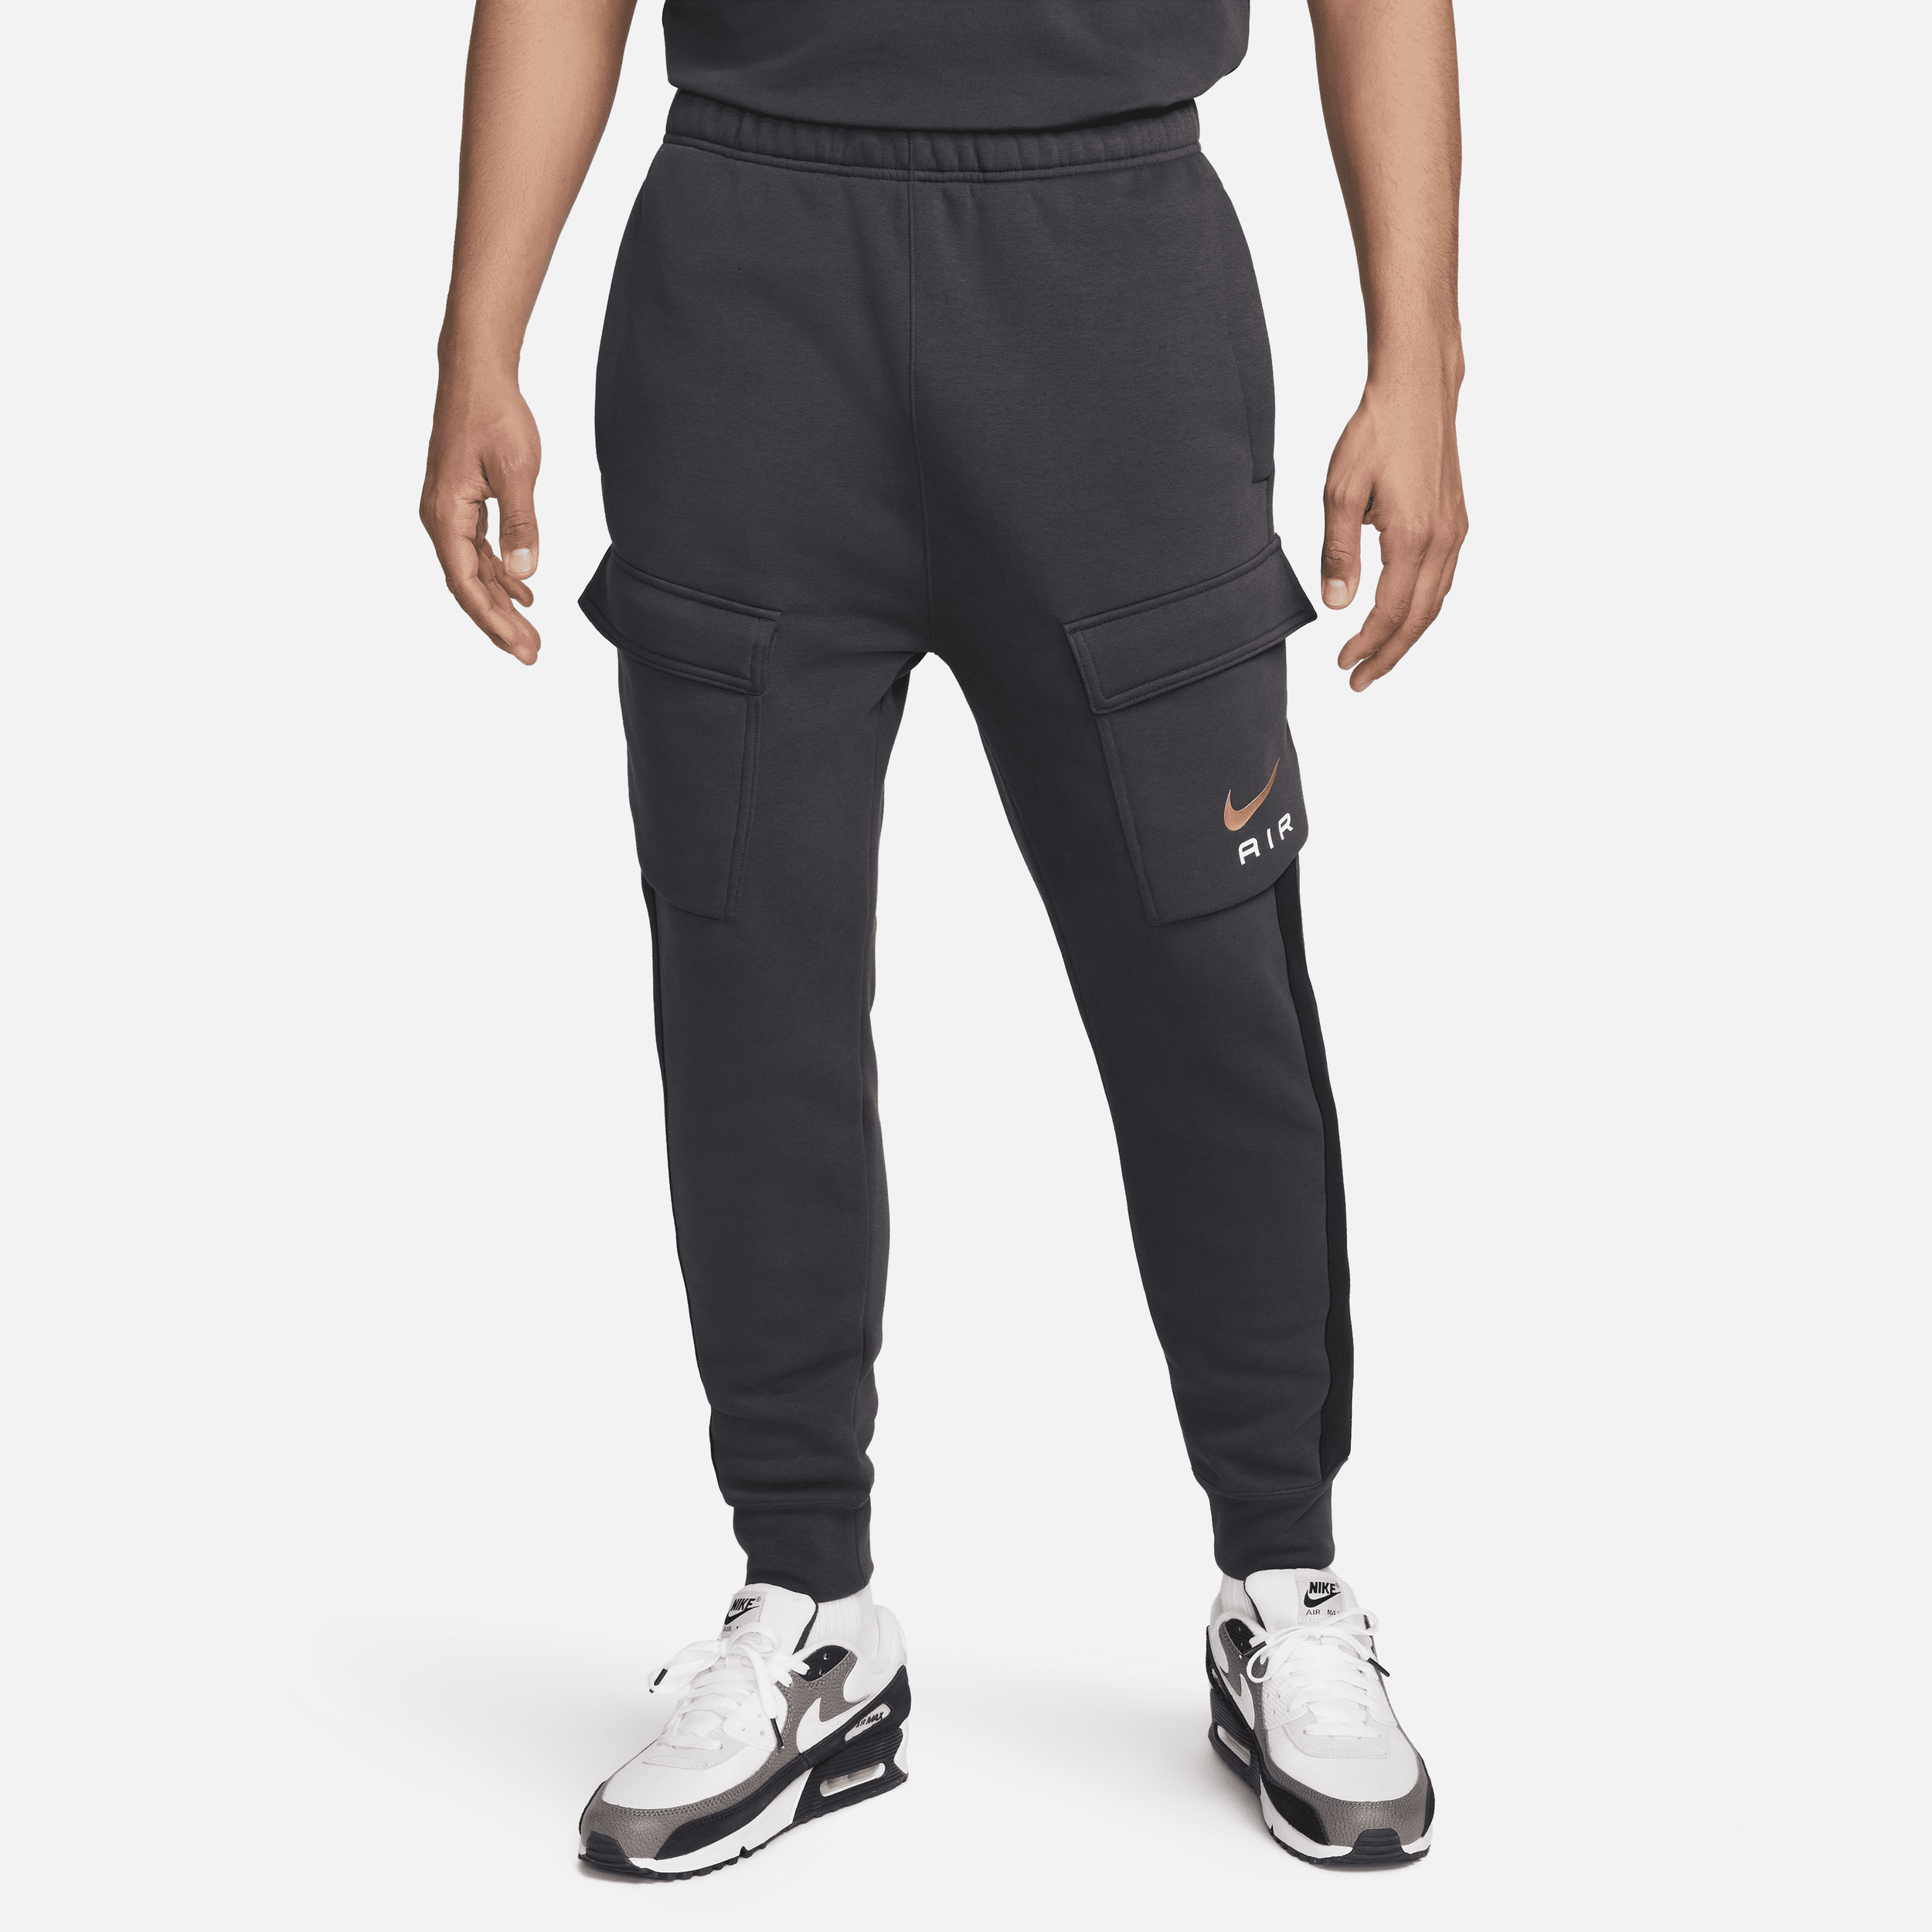 Pantaloni cargo in fleece Nike Air – Uomo - Grigio